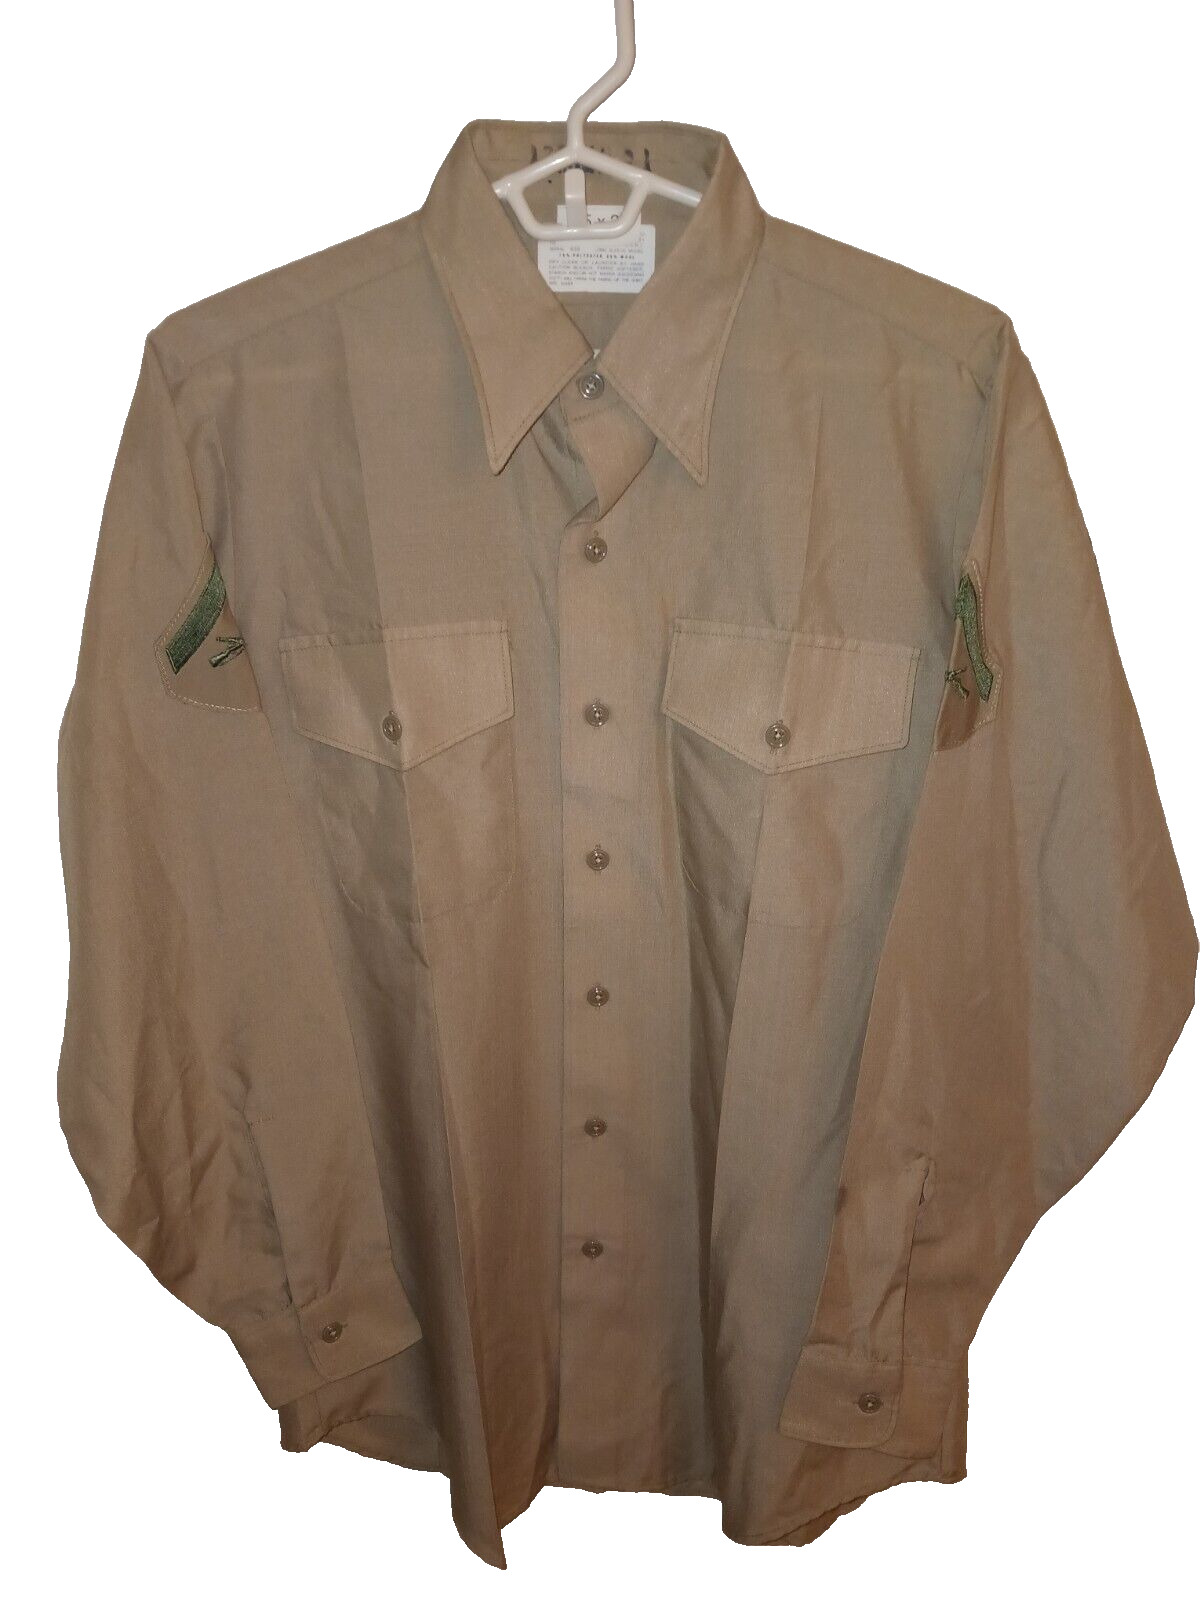 USMC Marine Corps Military Men's Khaki Shade Long Sleeve Shirt - Size 15 x 33